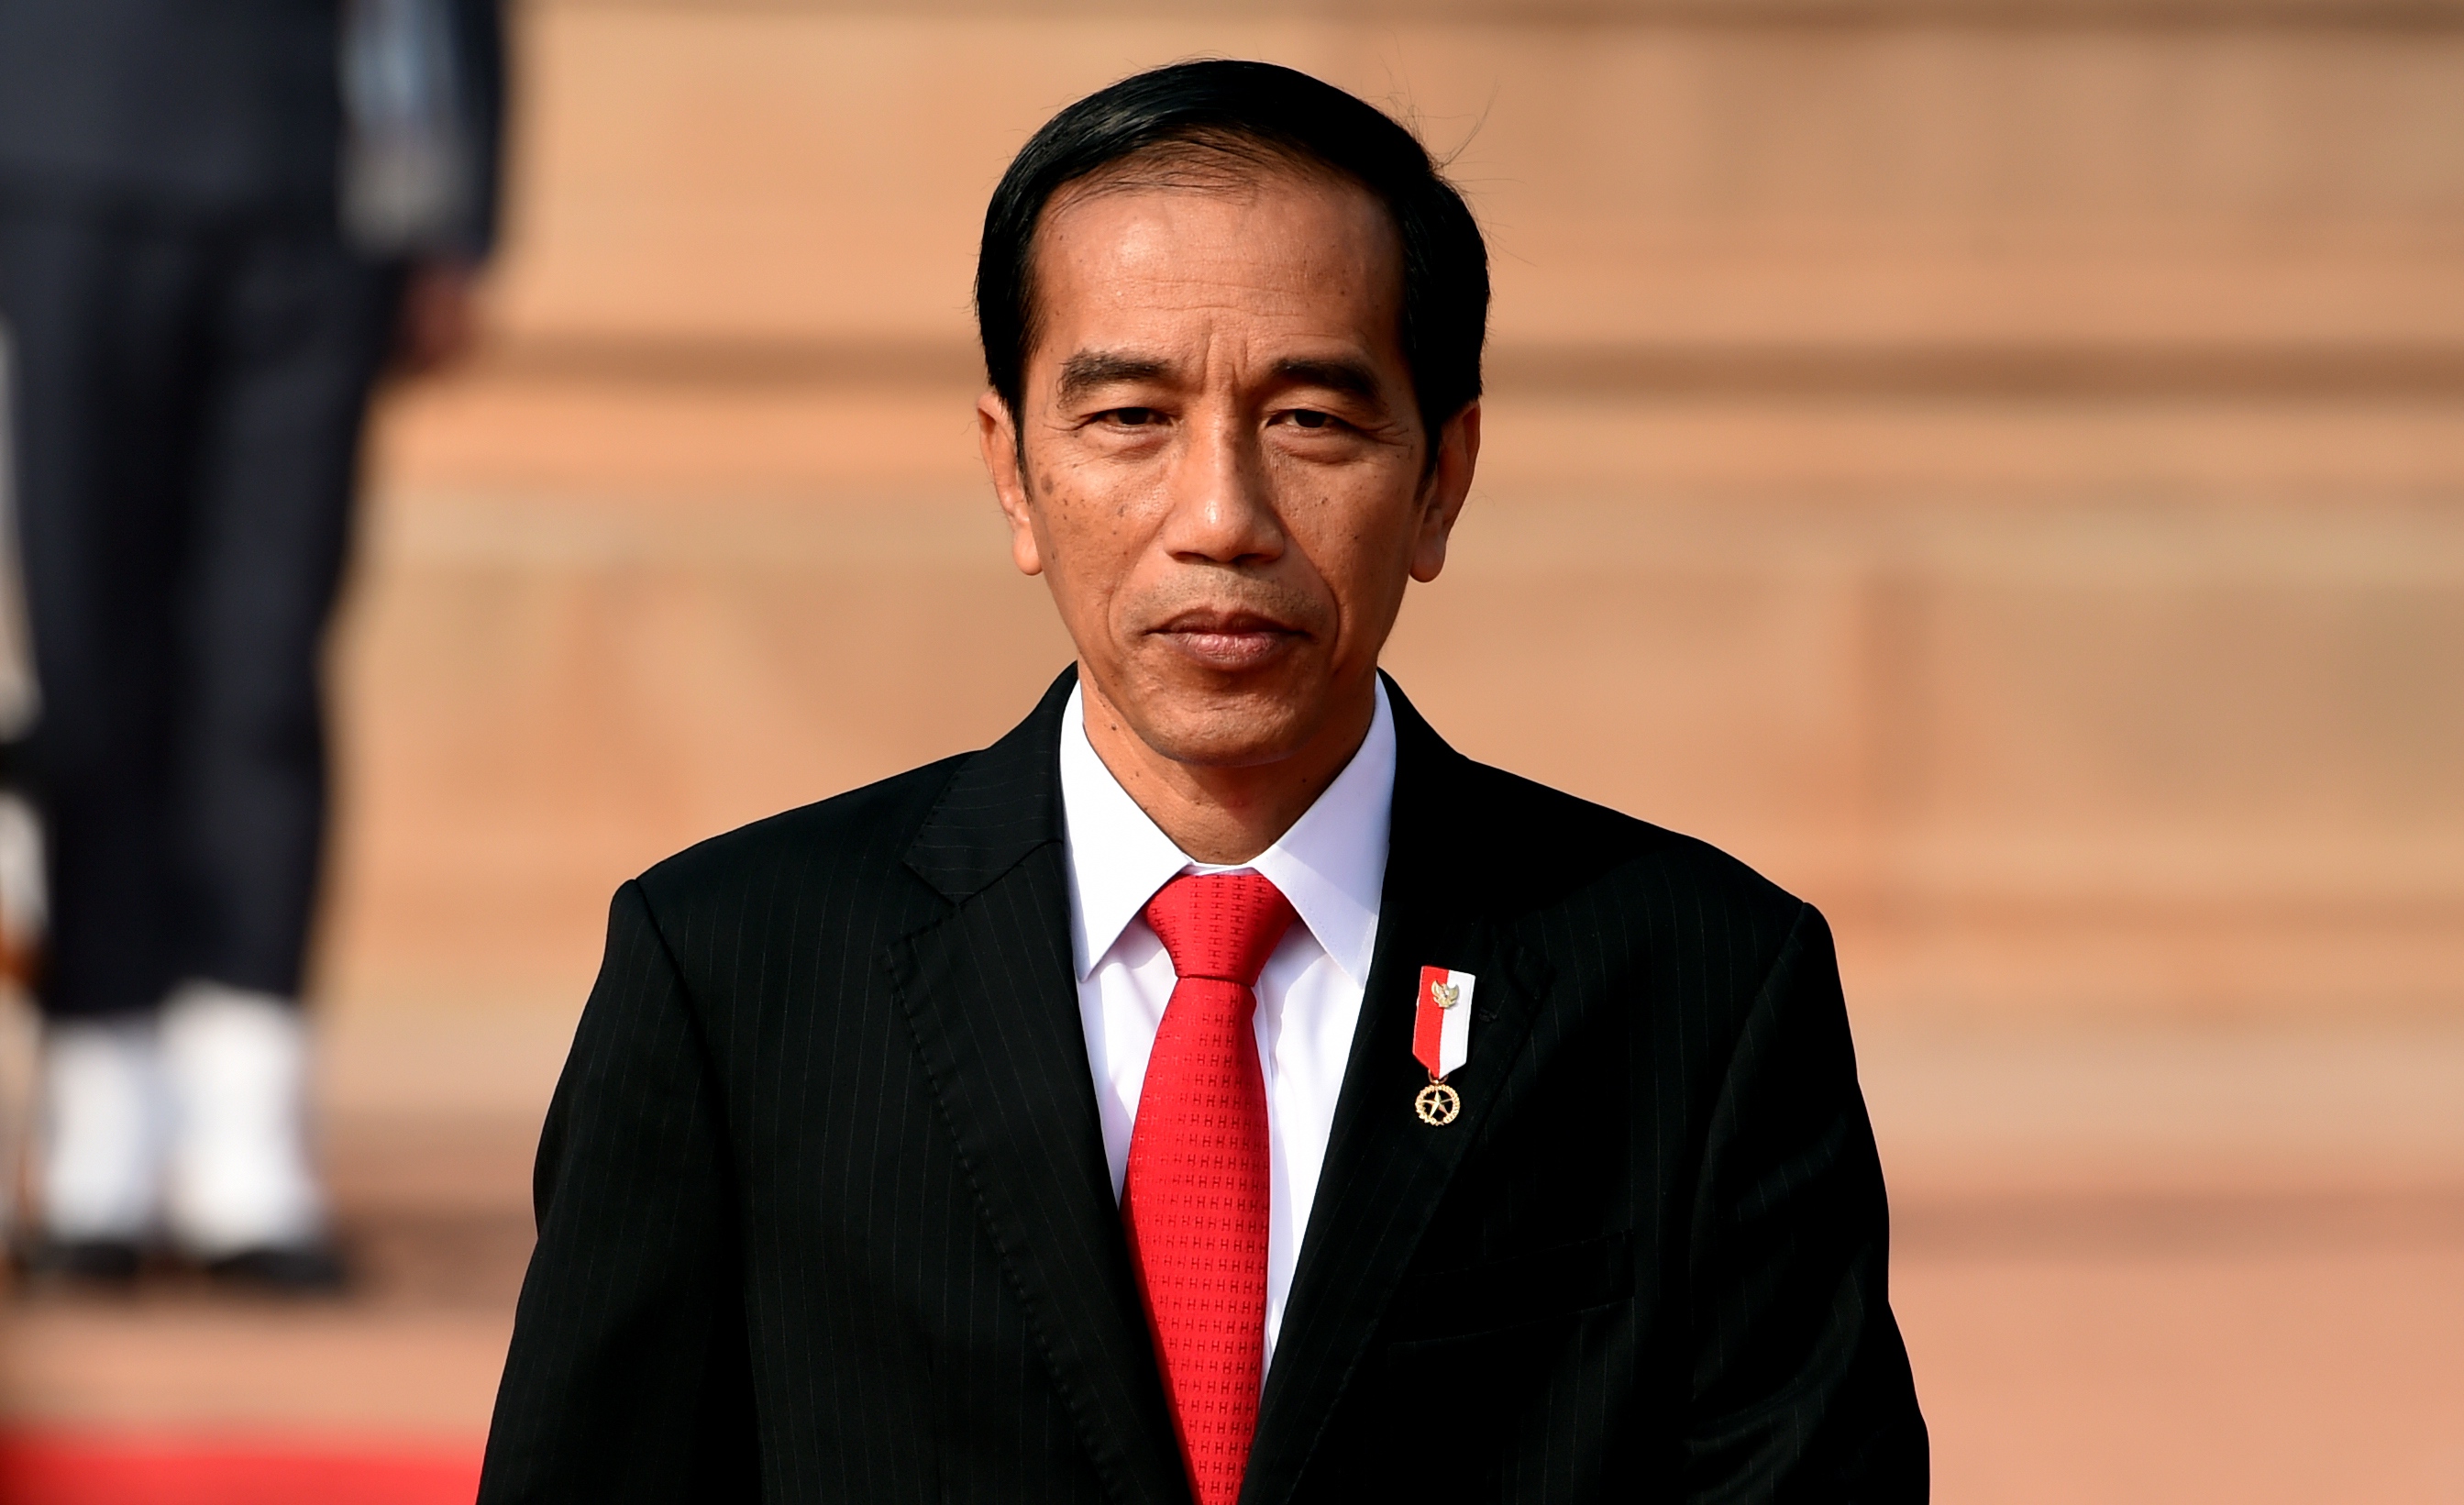 Jokowi Visits Turkey